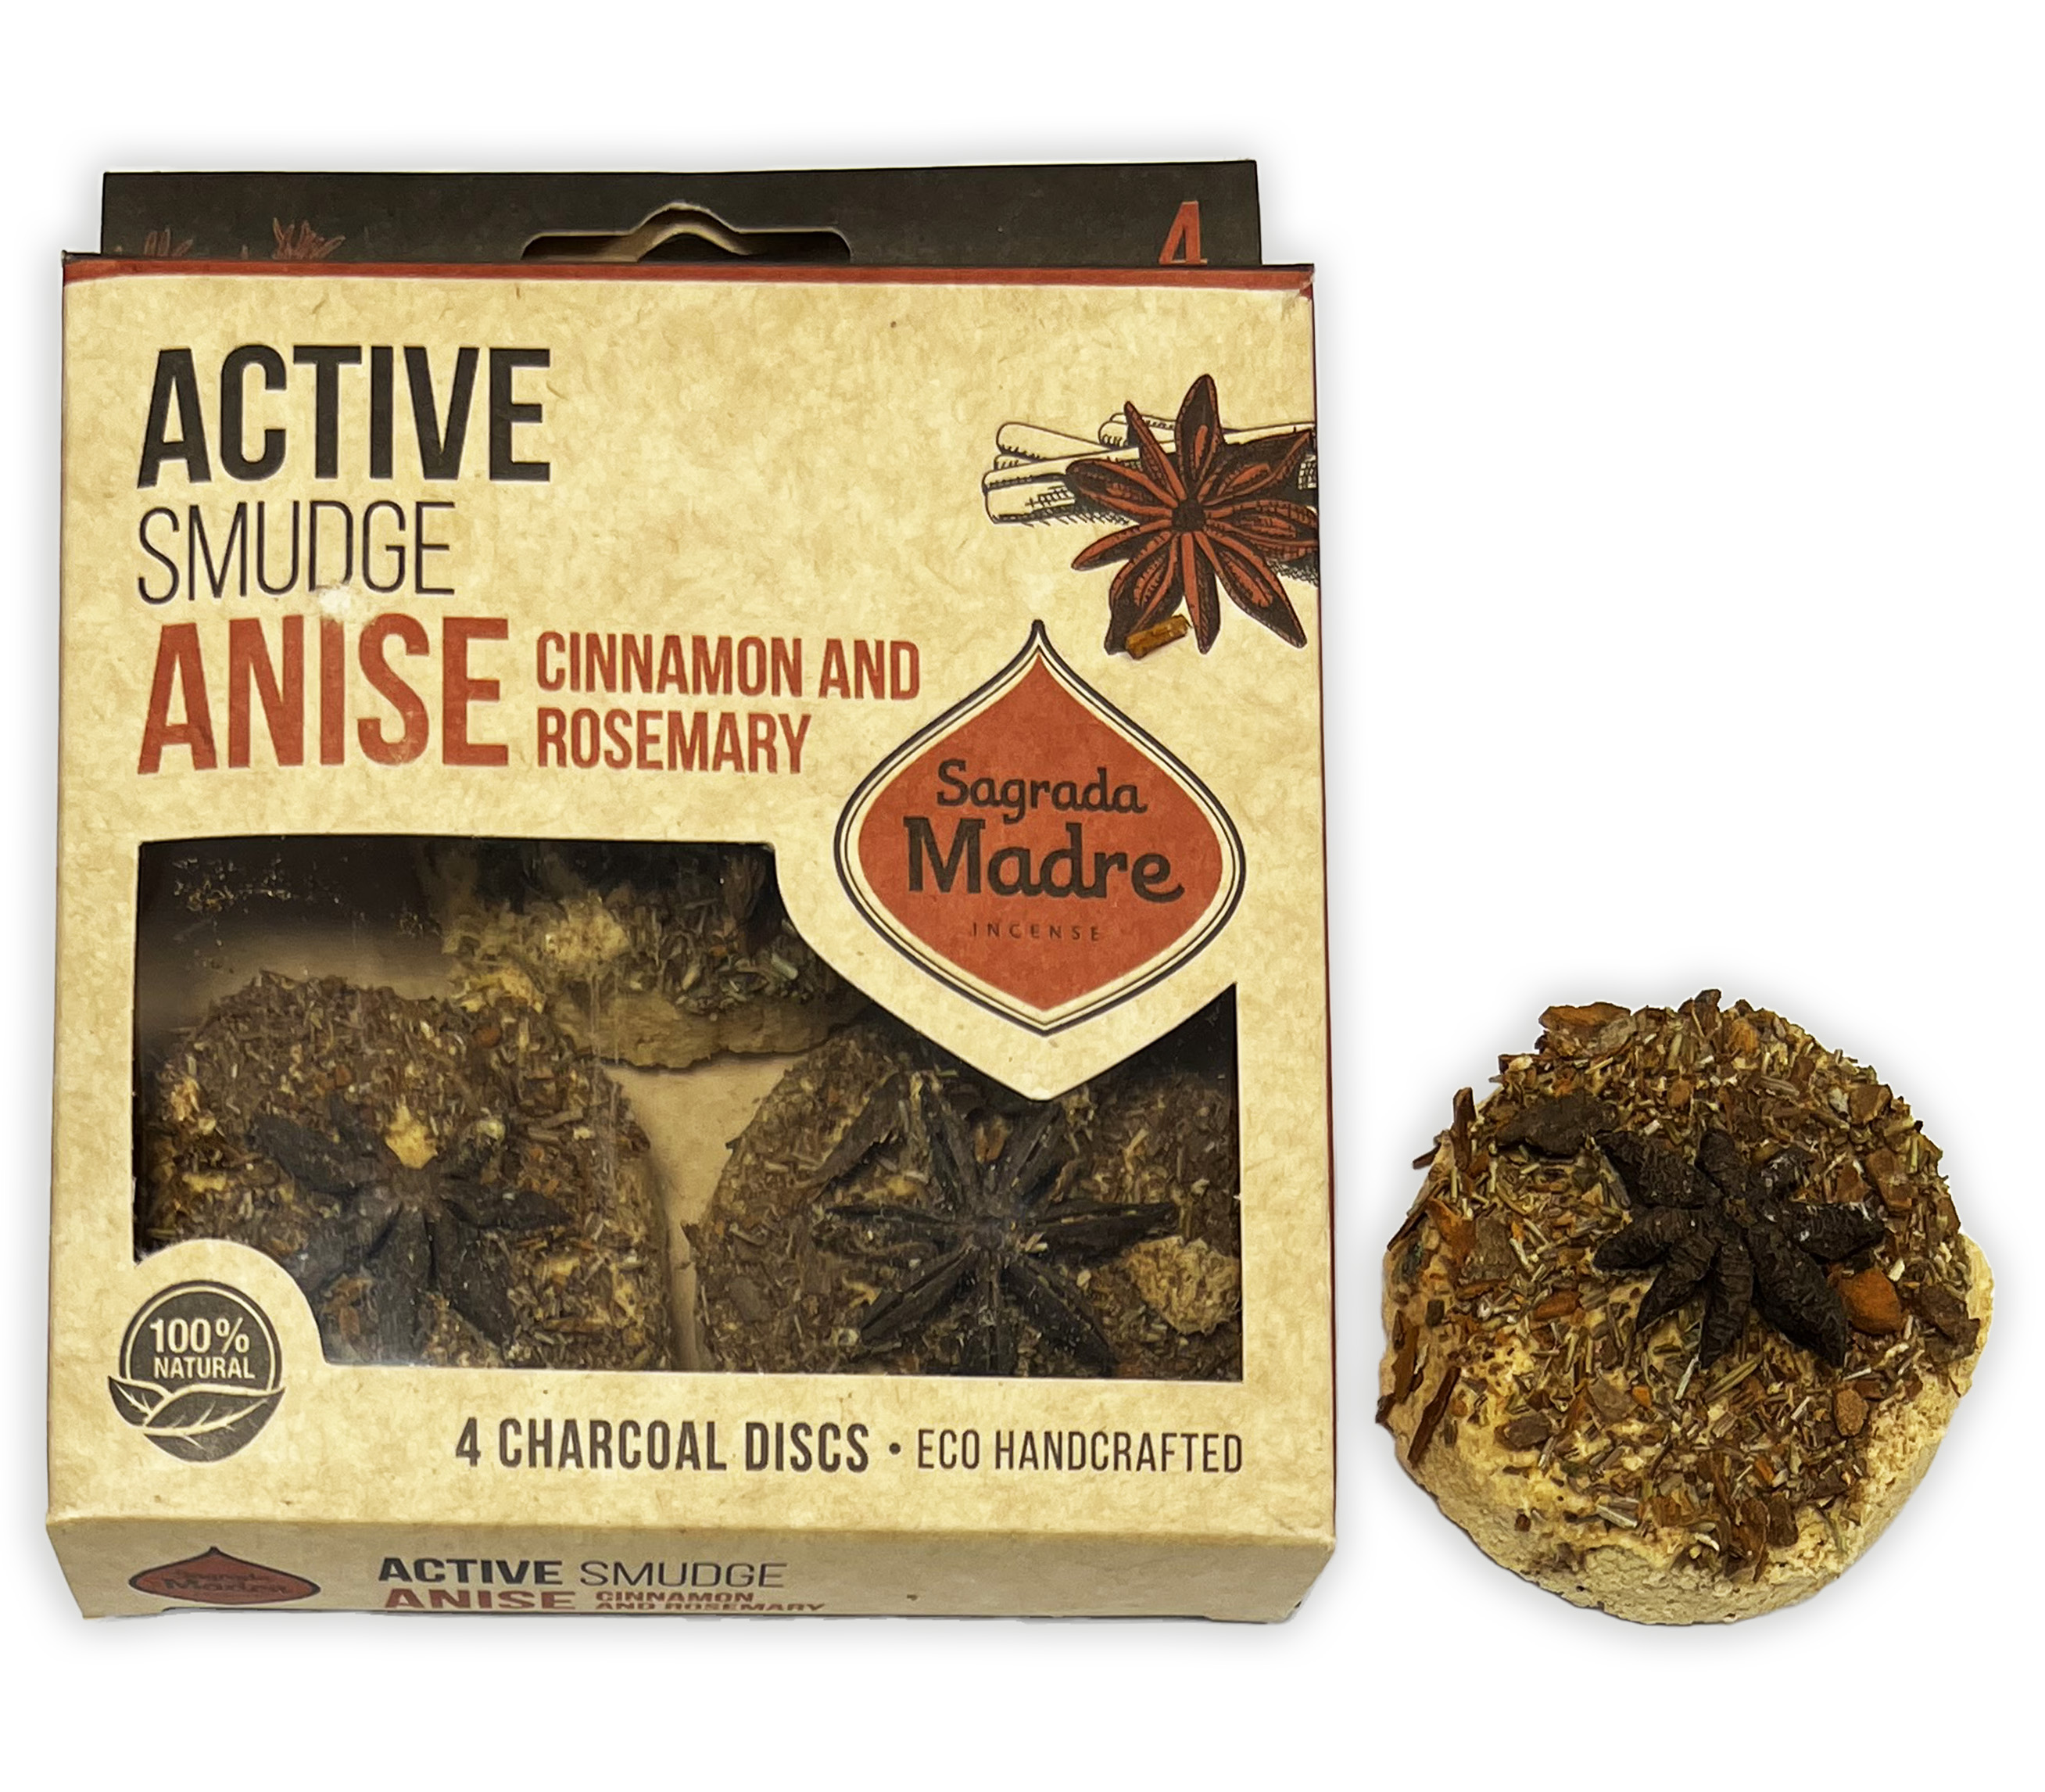 Sagrada Madre - Anise, cinnamon and rosemary pastille 